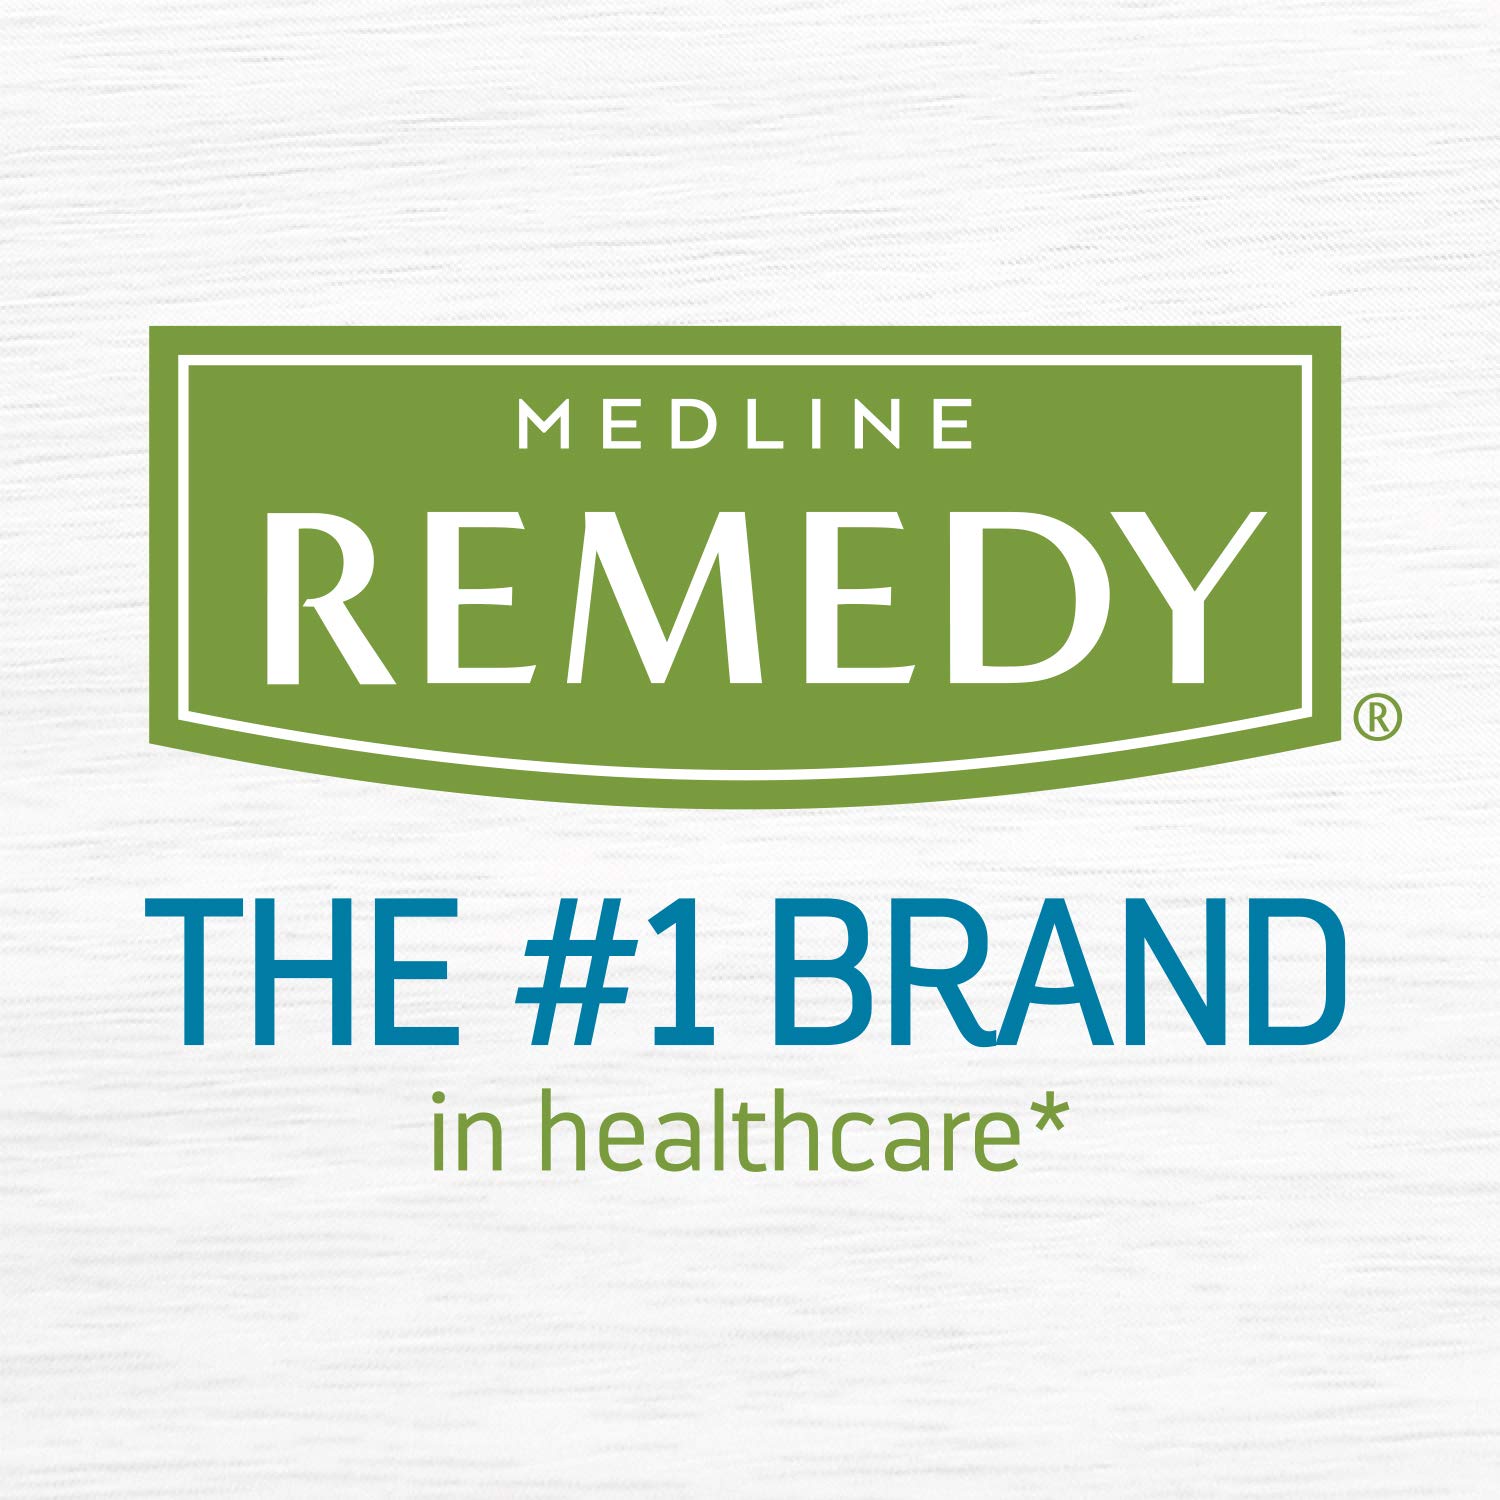 Medline Remedy Olivamine Foaming Body Cleanser, No Rinse, Scented, 9-oz Pump Bottle